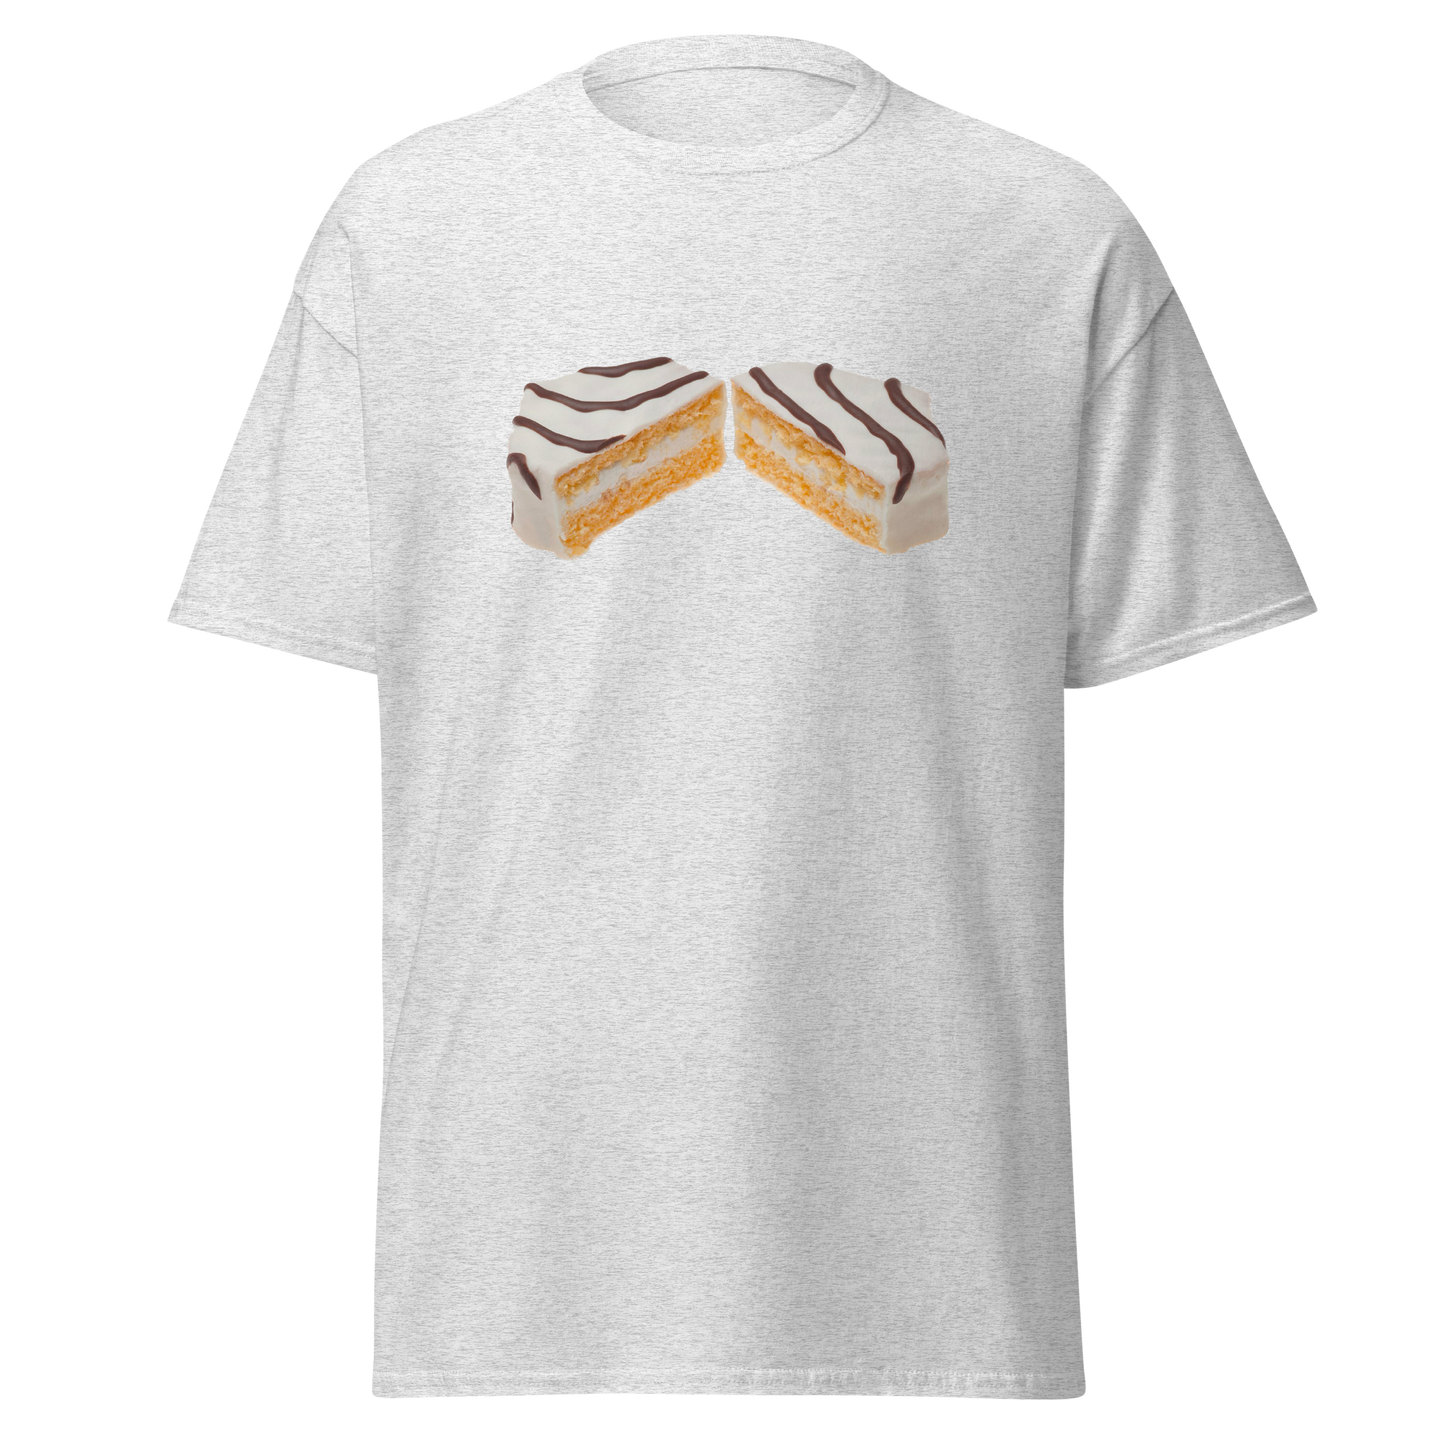 Zebra Cake T-Shirt